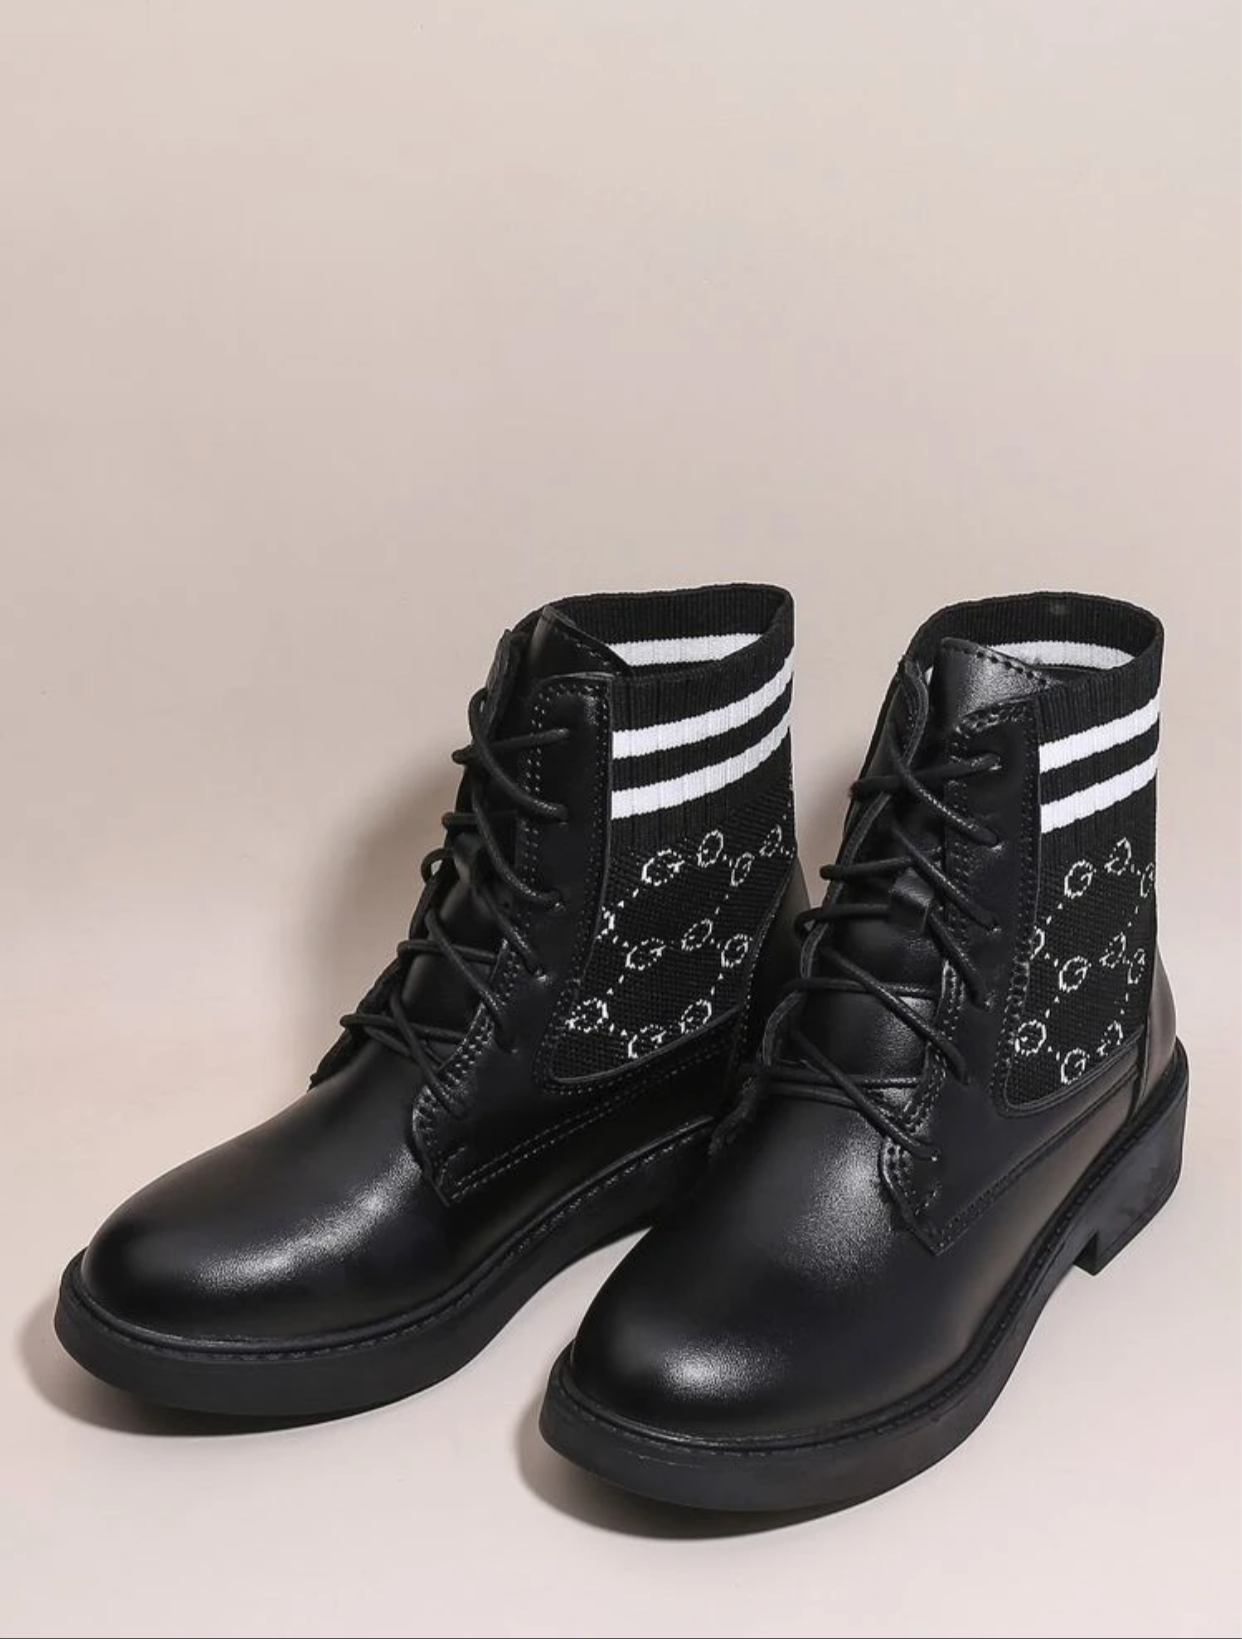 Cleo Combat boots